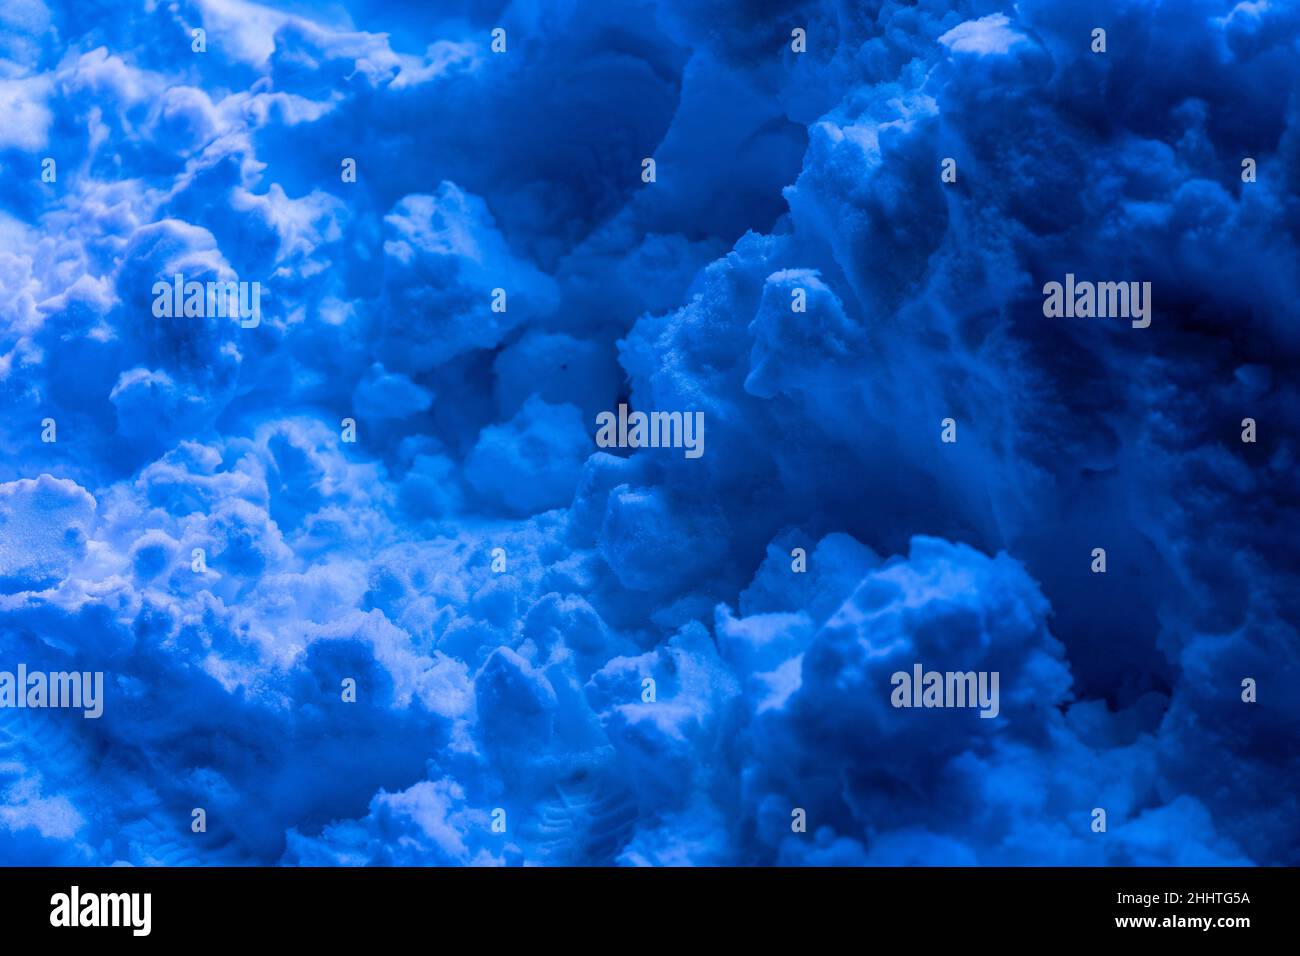 Snow surface. Fresh fluffy snow texture. Blue light luminance Stock Photo